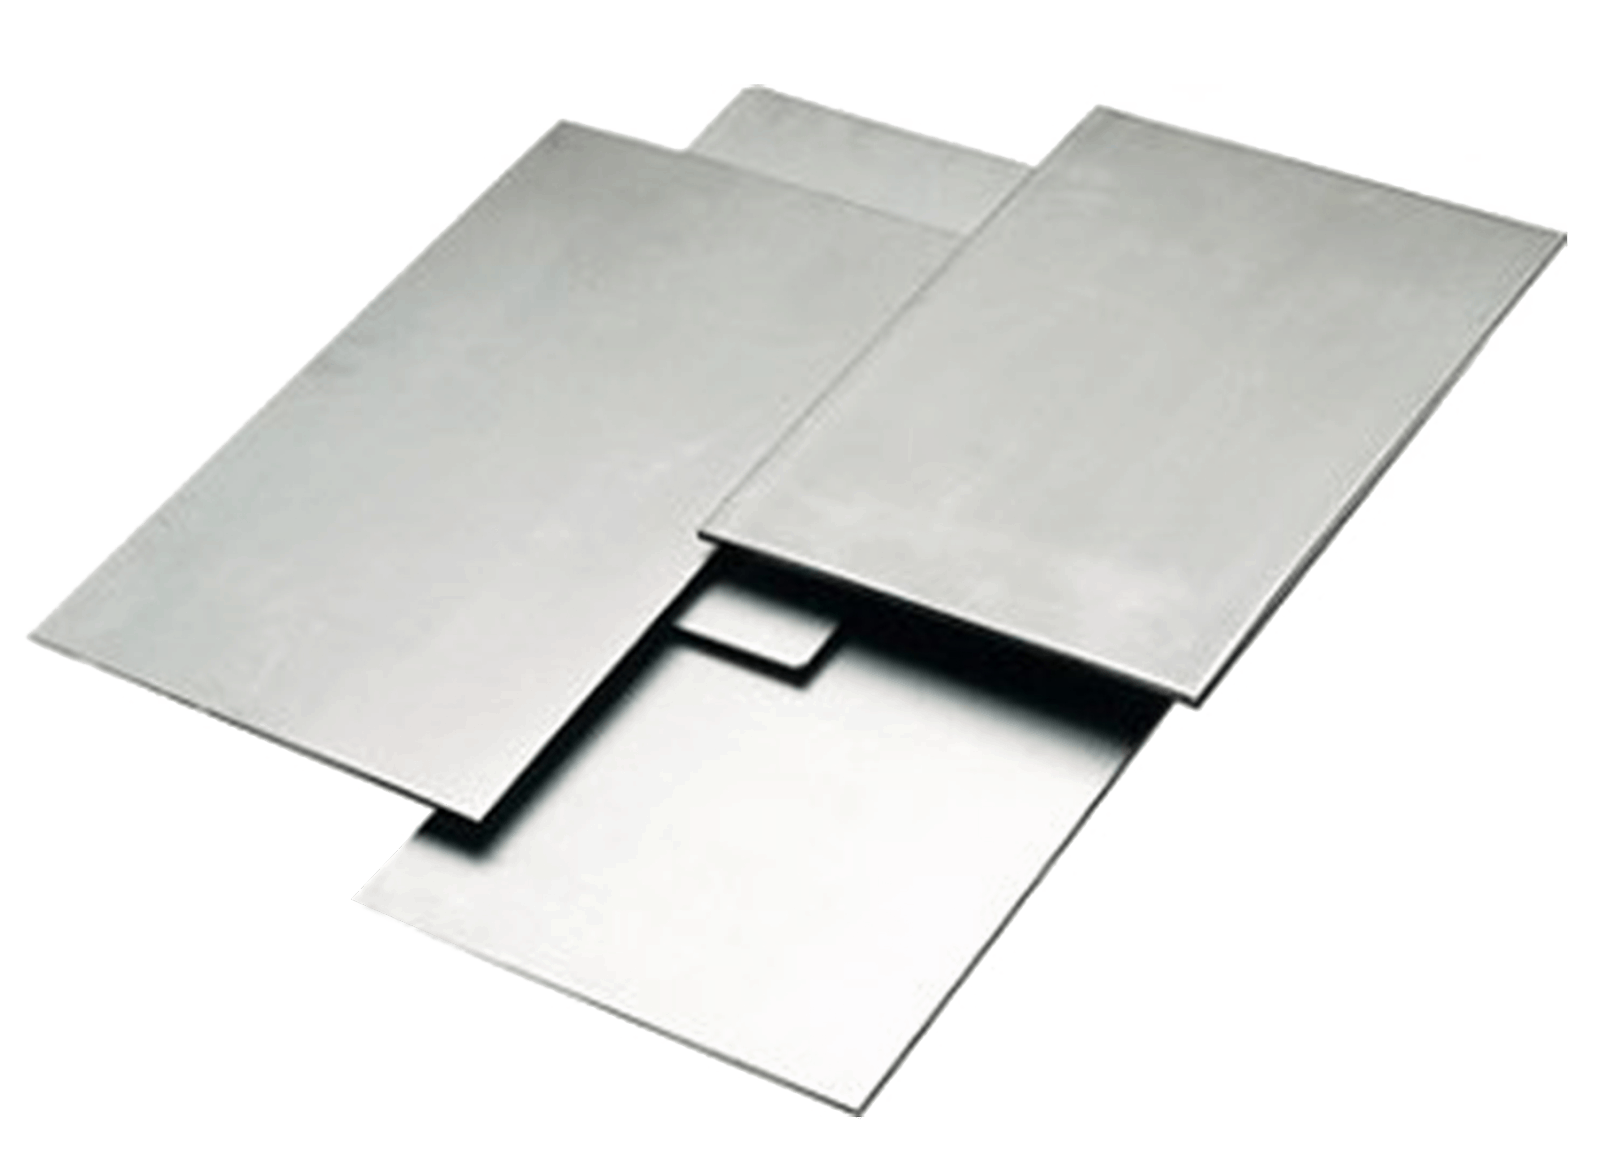 Sheet Metal Materials